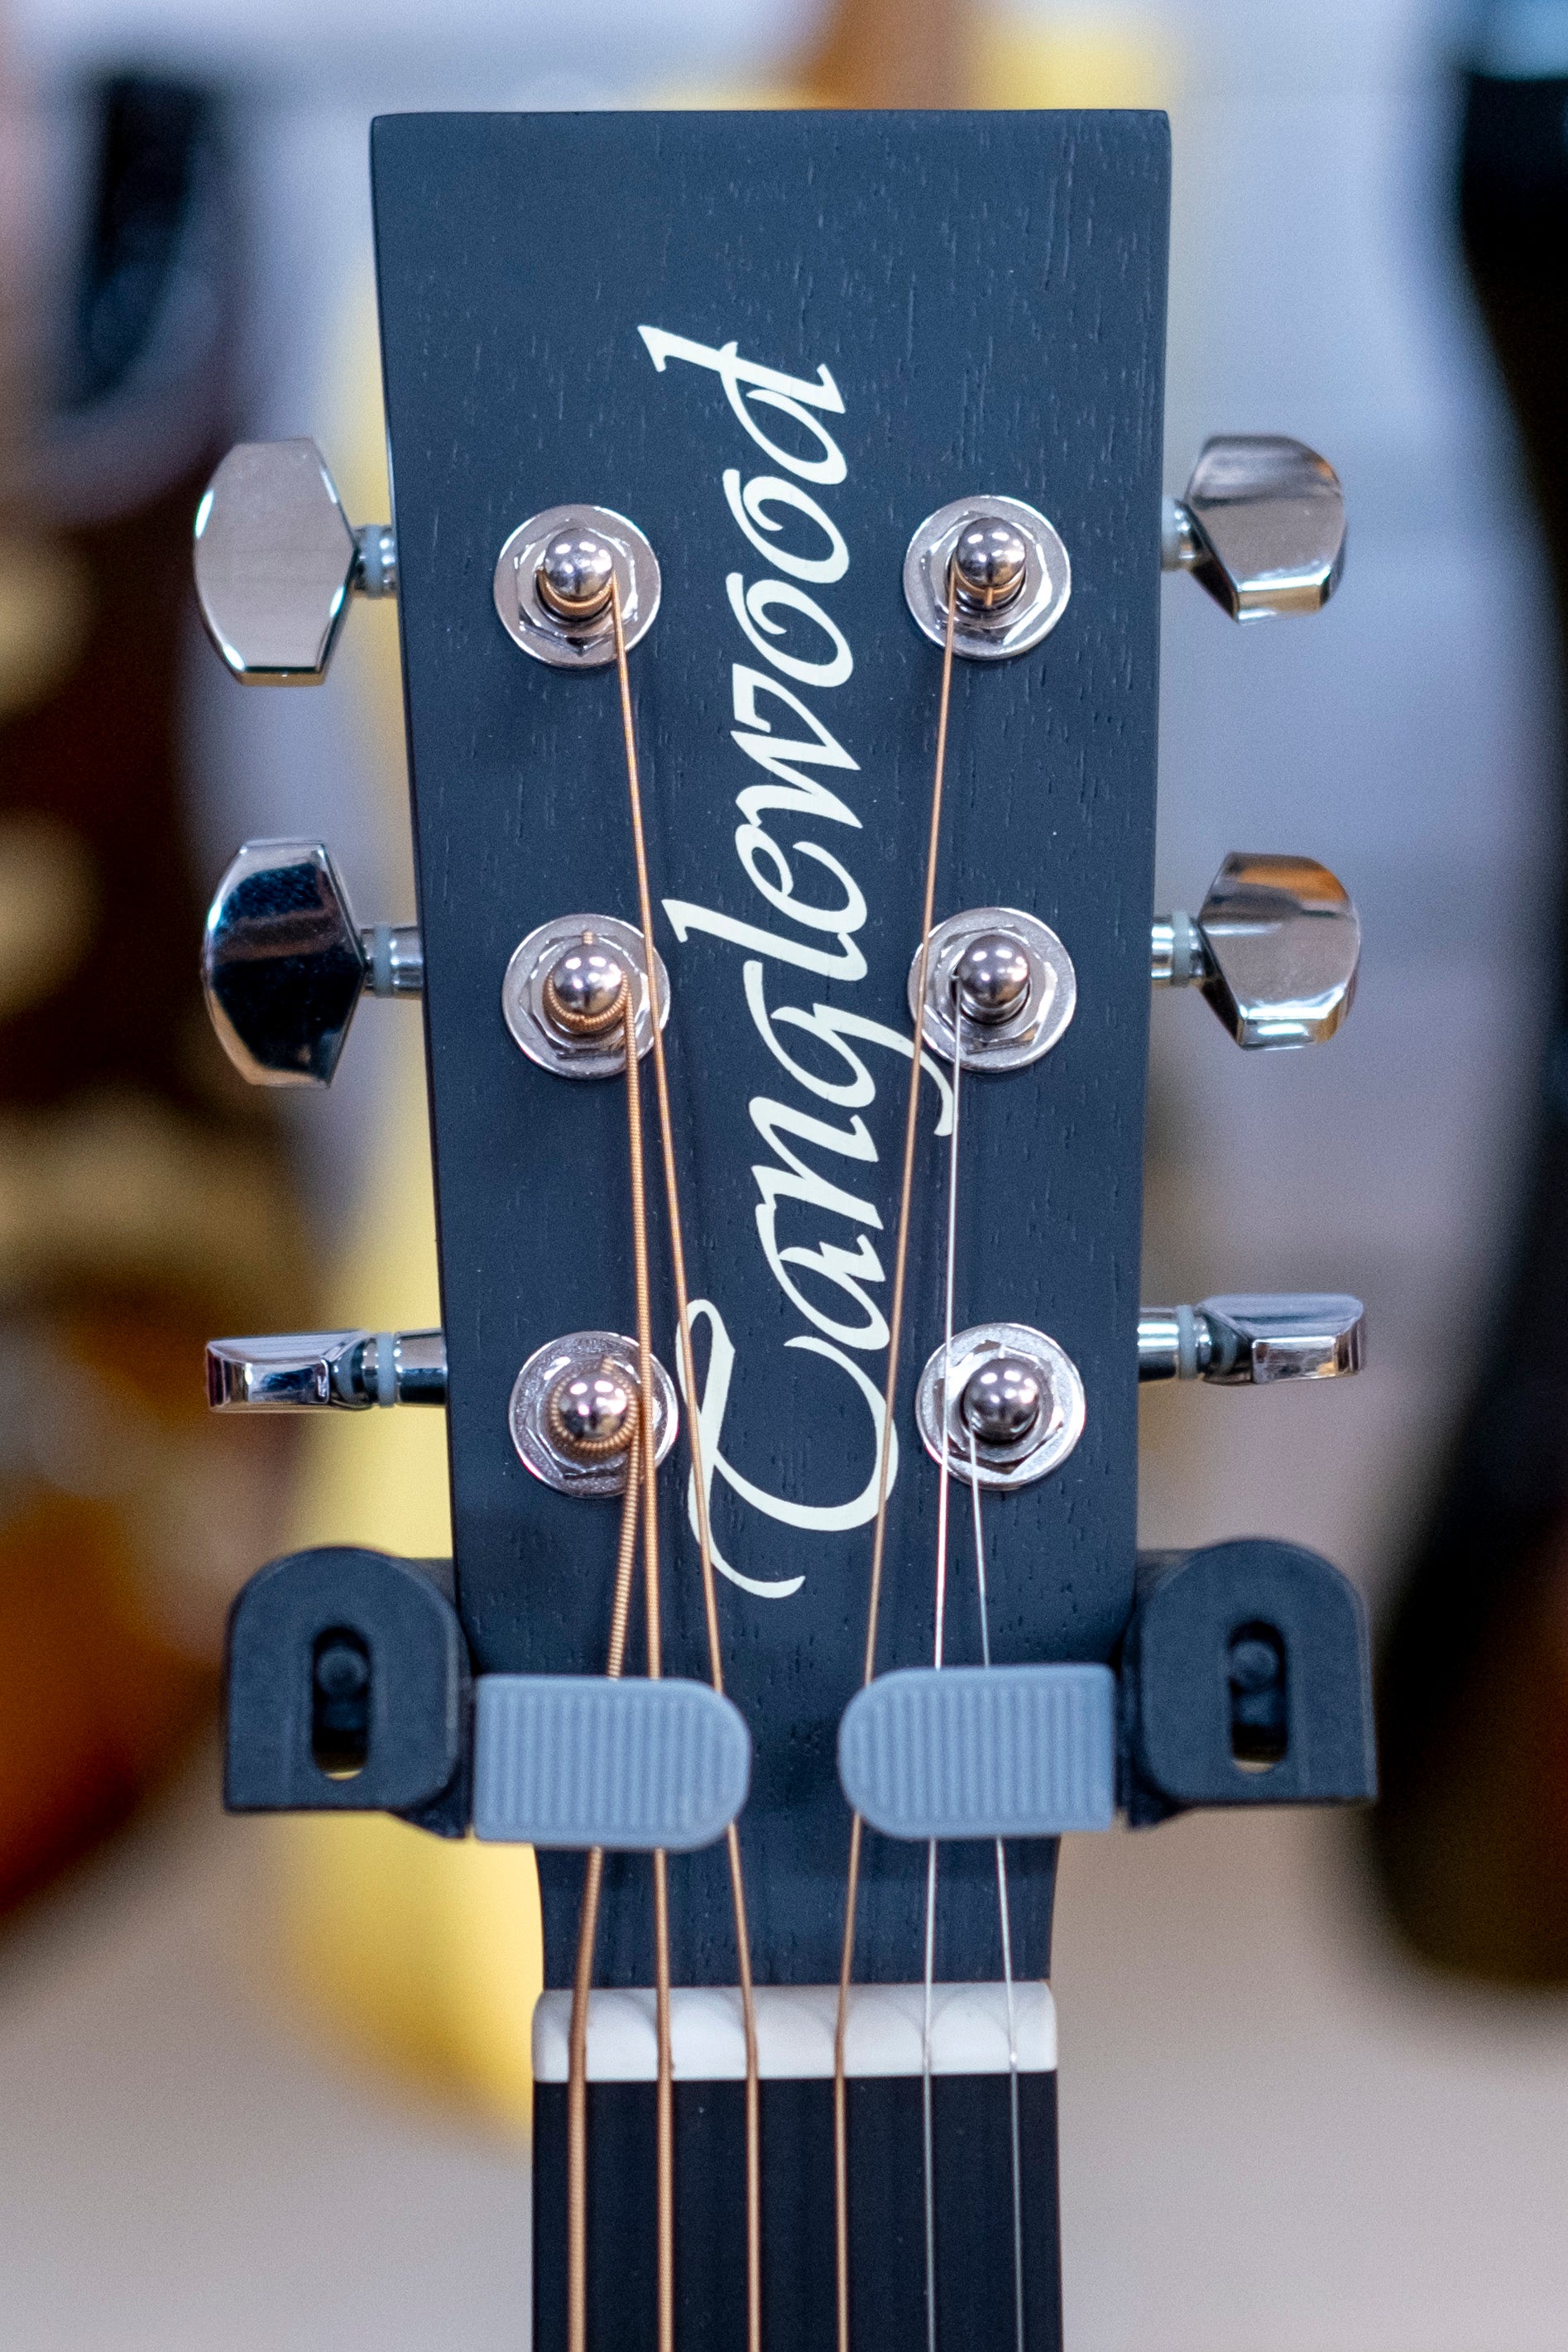 Tanglewood Blackbird Superfolk Acoustic Electric Guitar